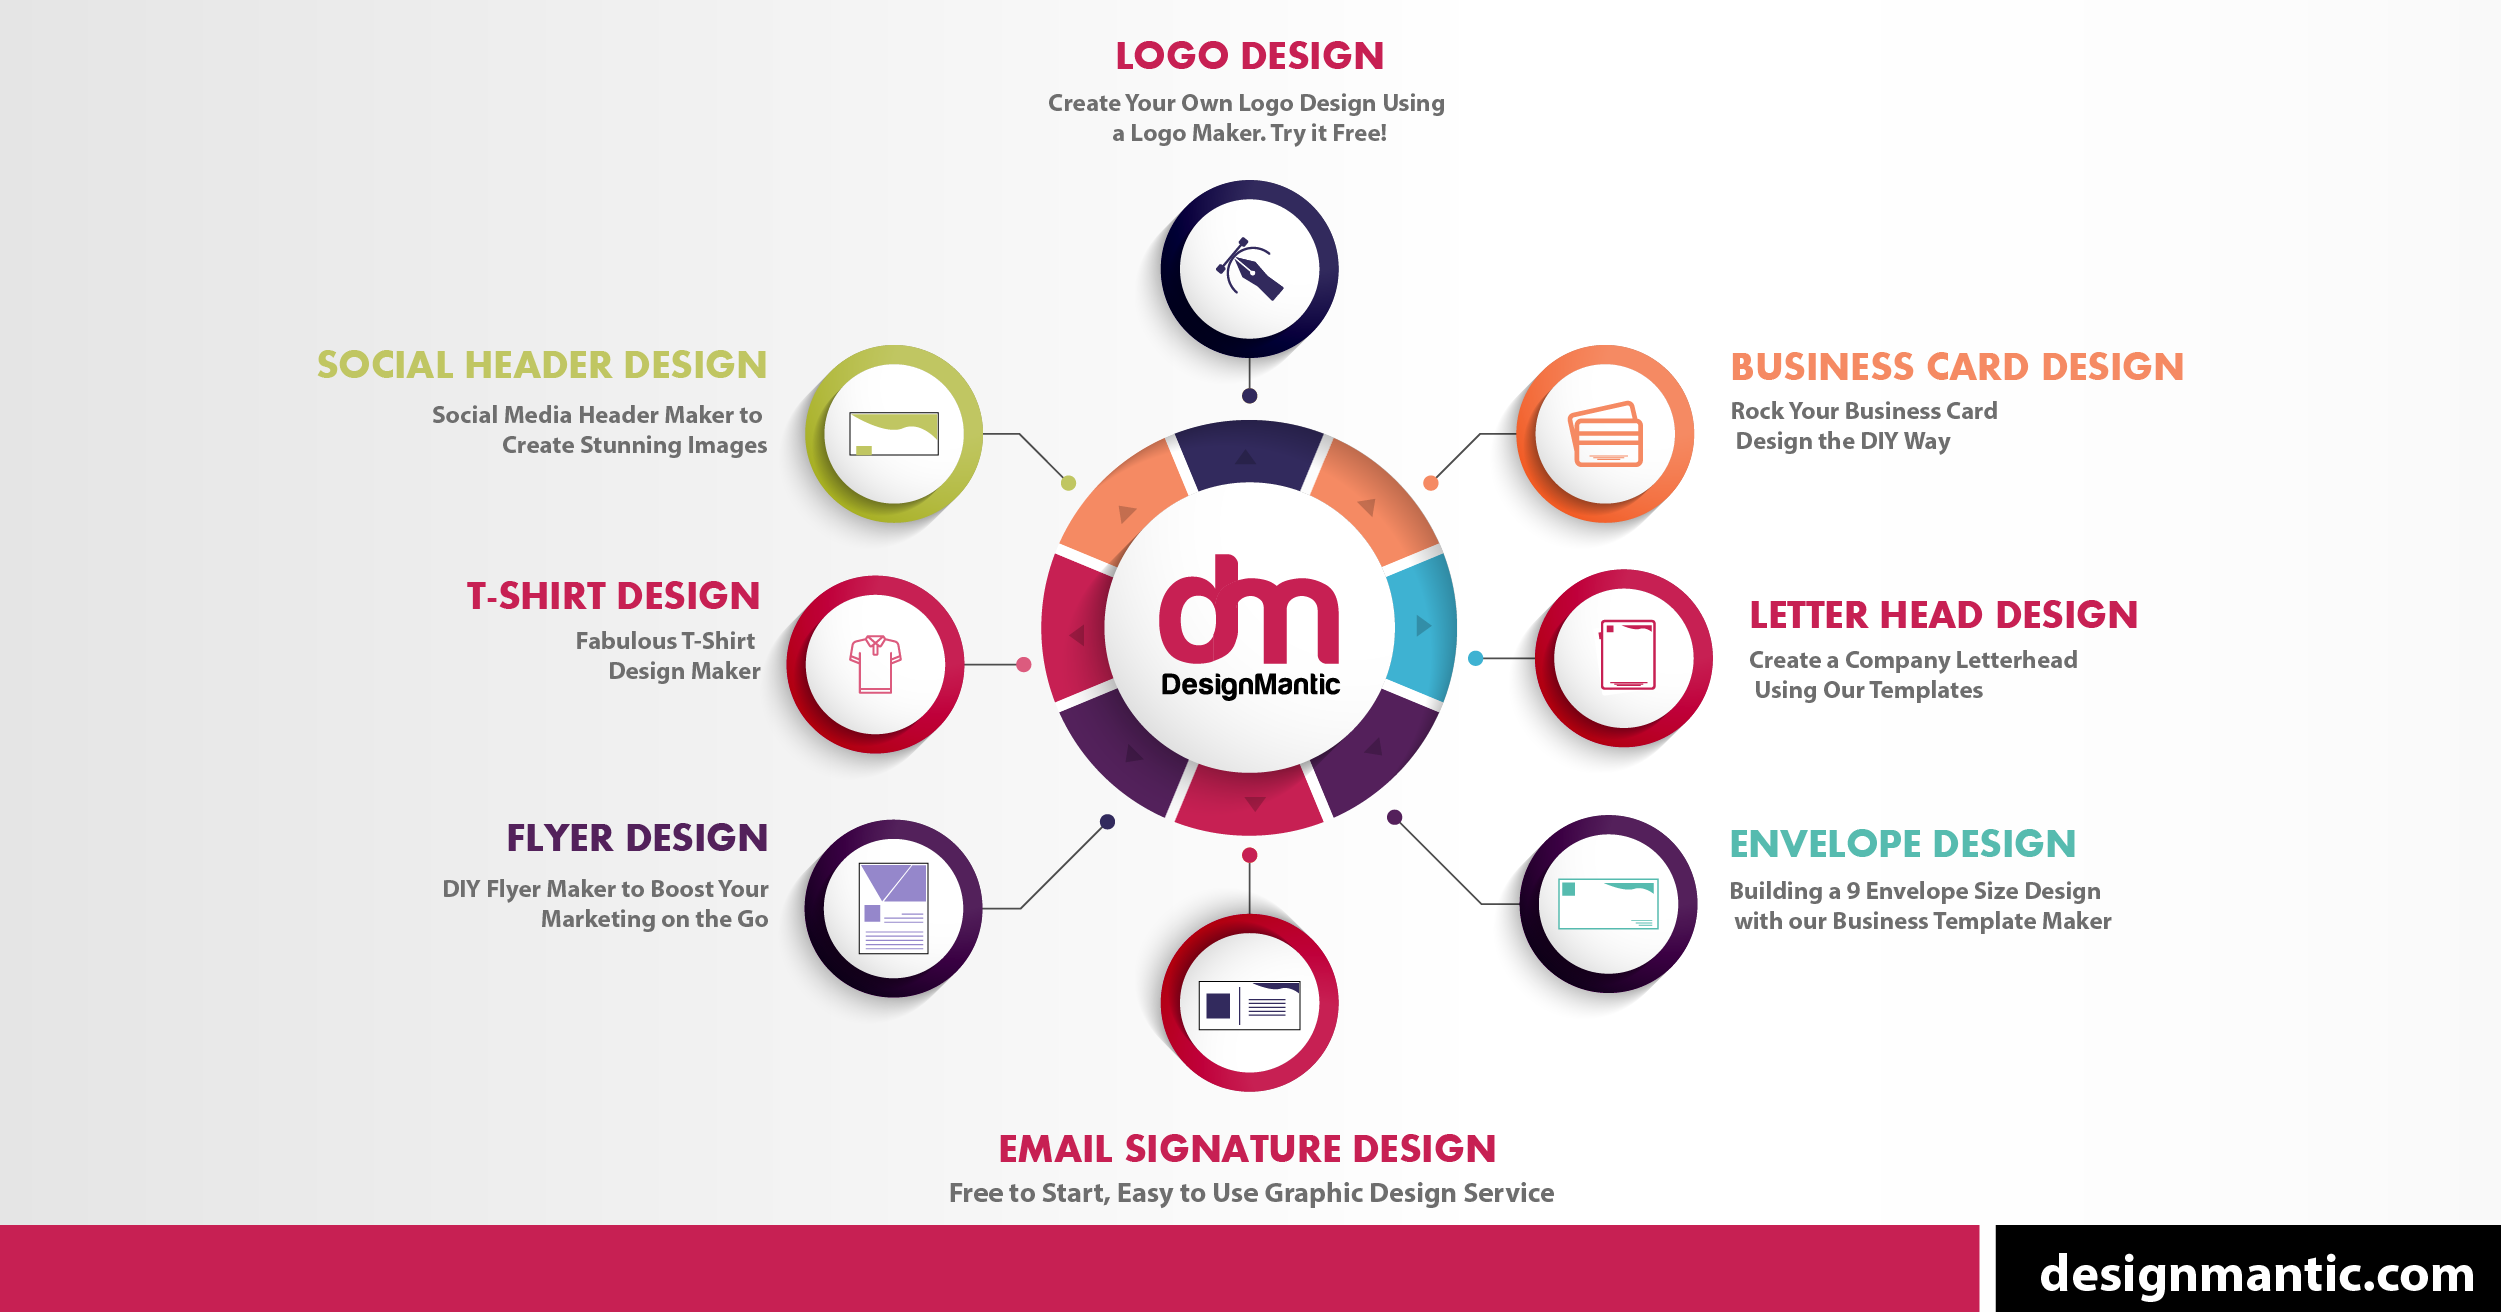 Graphic Design Software & Logo Tool | DesignMantic: The Design Shop